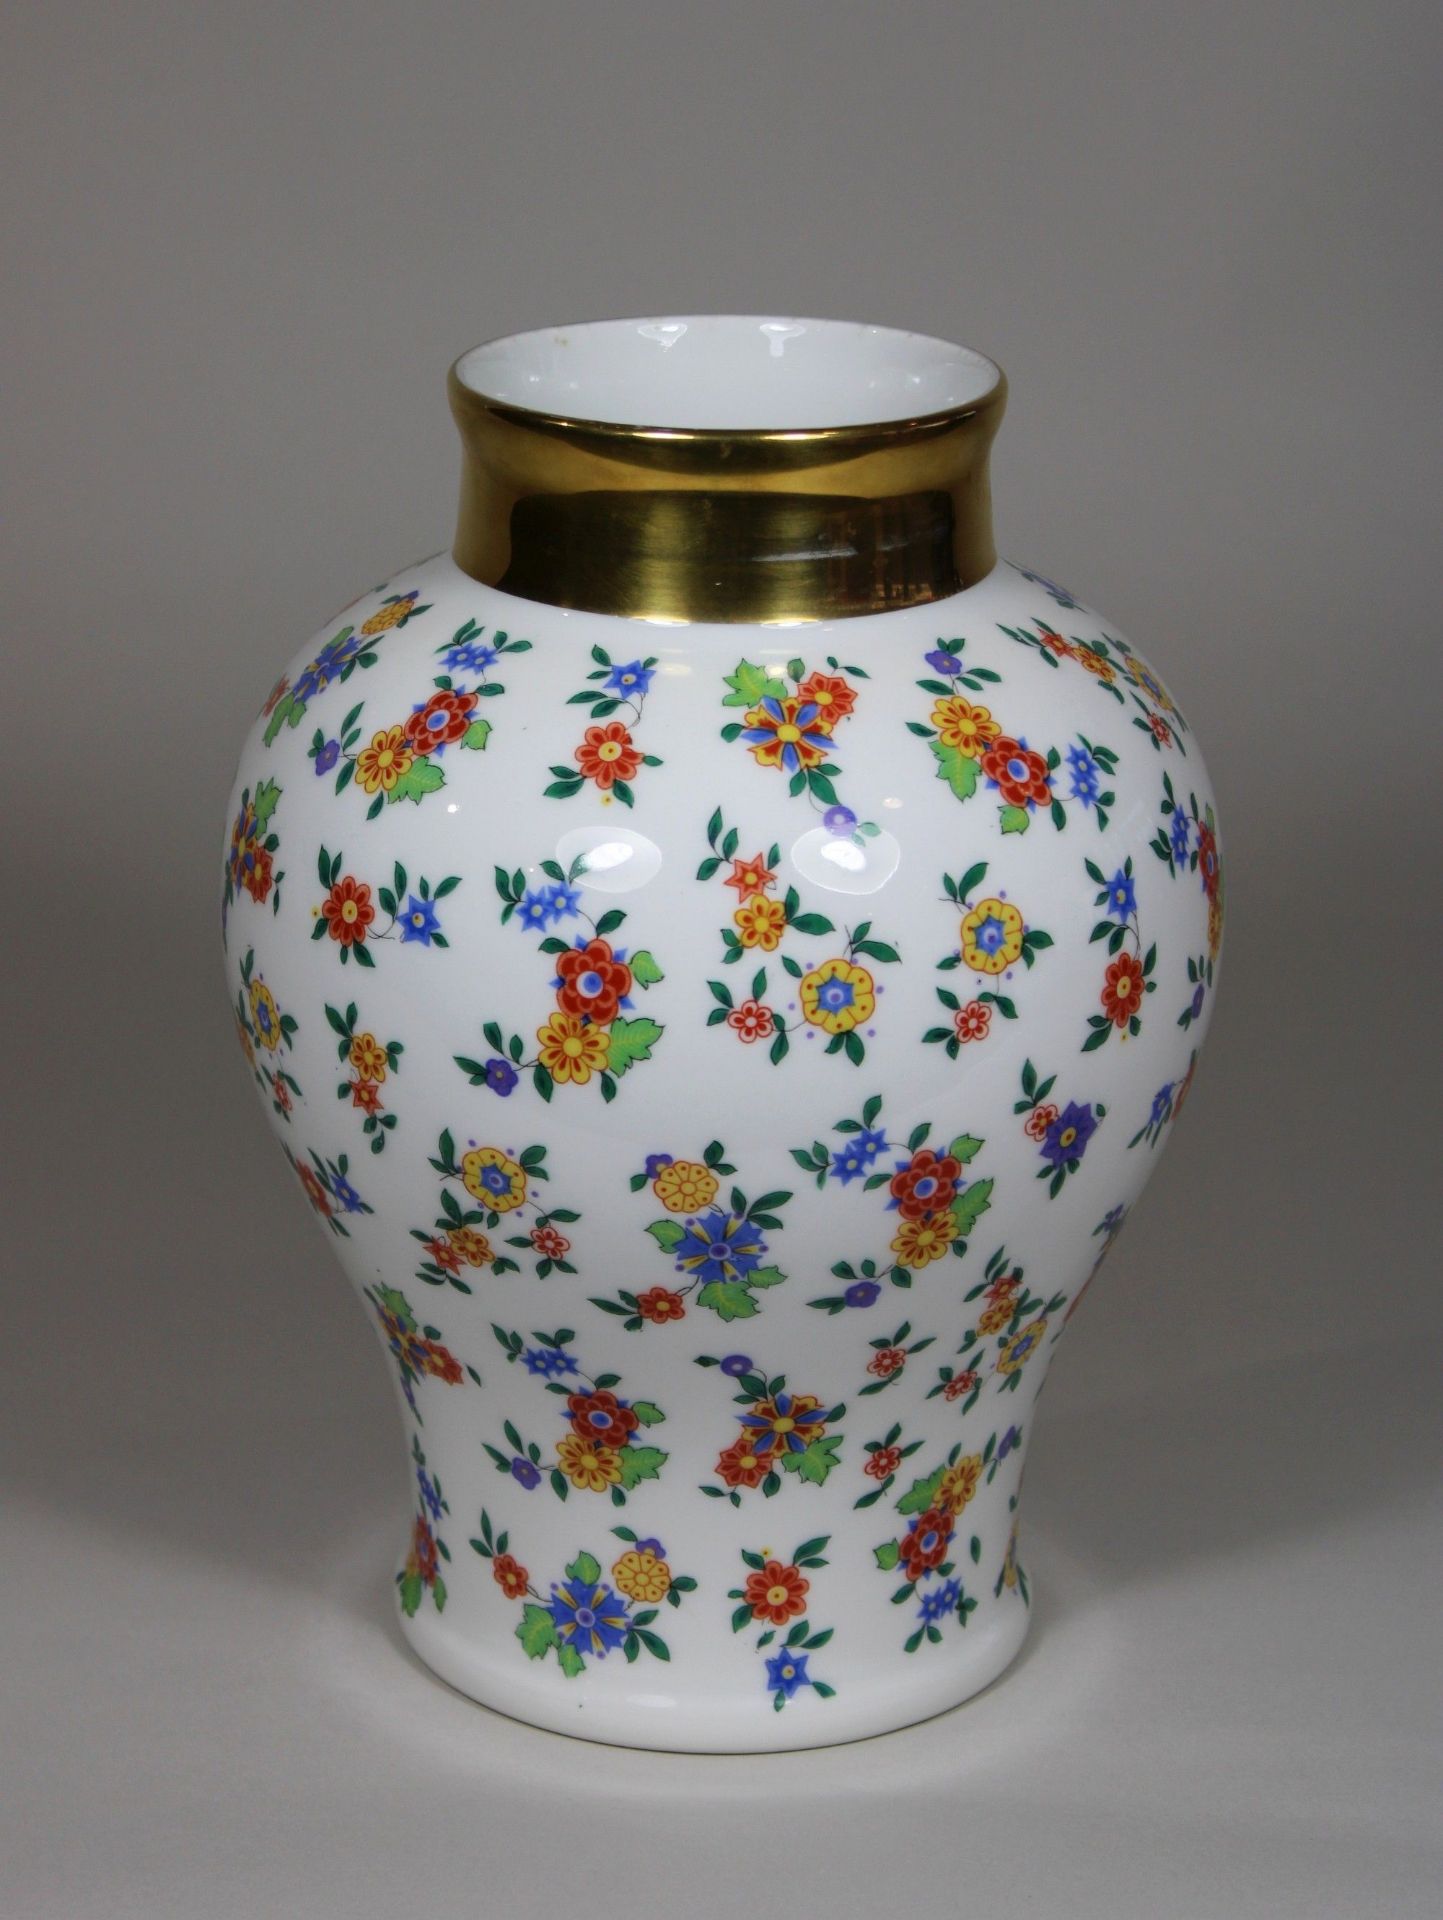 Vase, Gebrüder Schoenau, Porzellan, Blumendekor, Goldrand, H. 25 cm, guter, altersbedingter